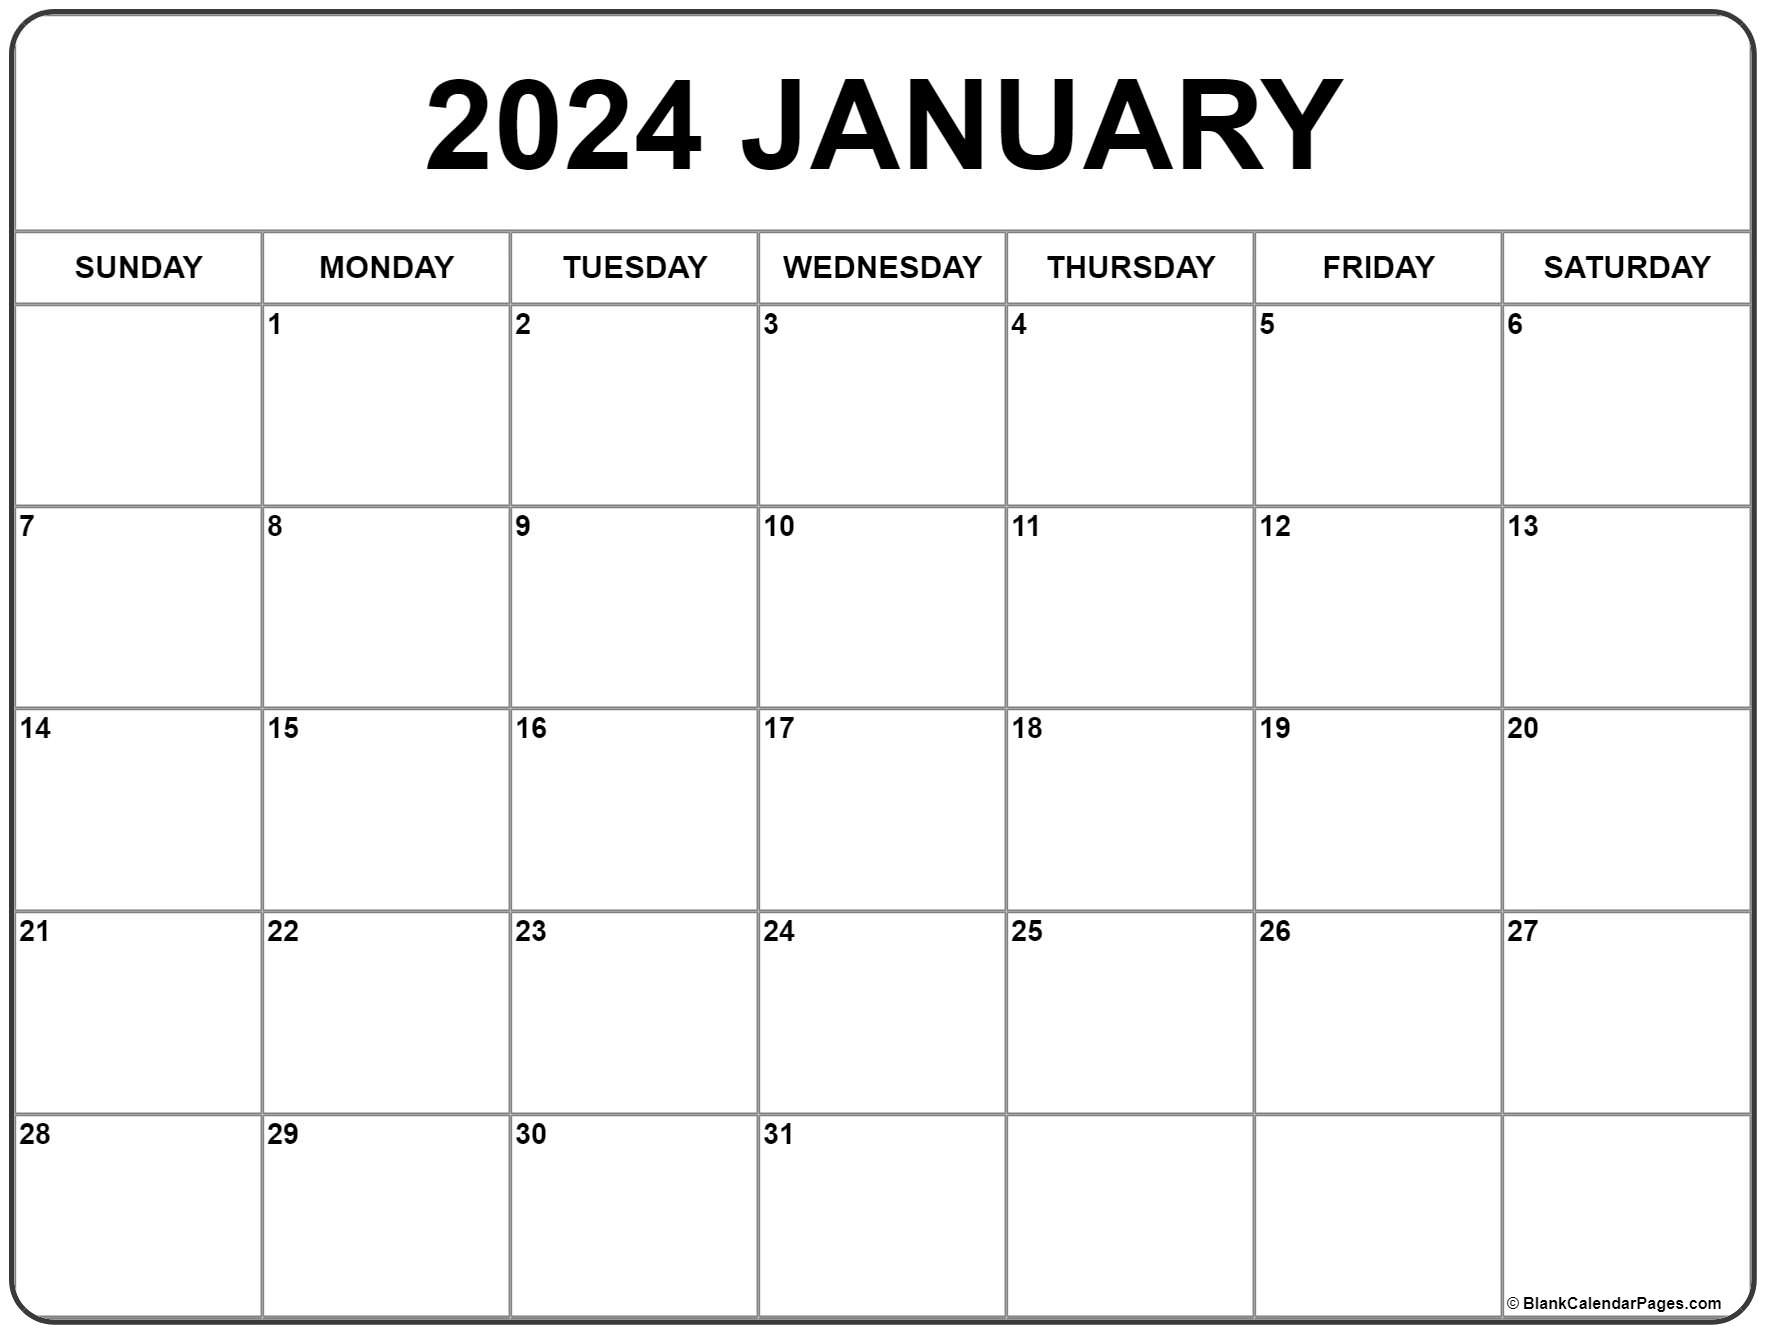 January 2024 Calendar | Free Printable Calendar for Free Printable Monthly Calendar January 2024